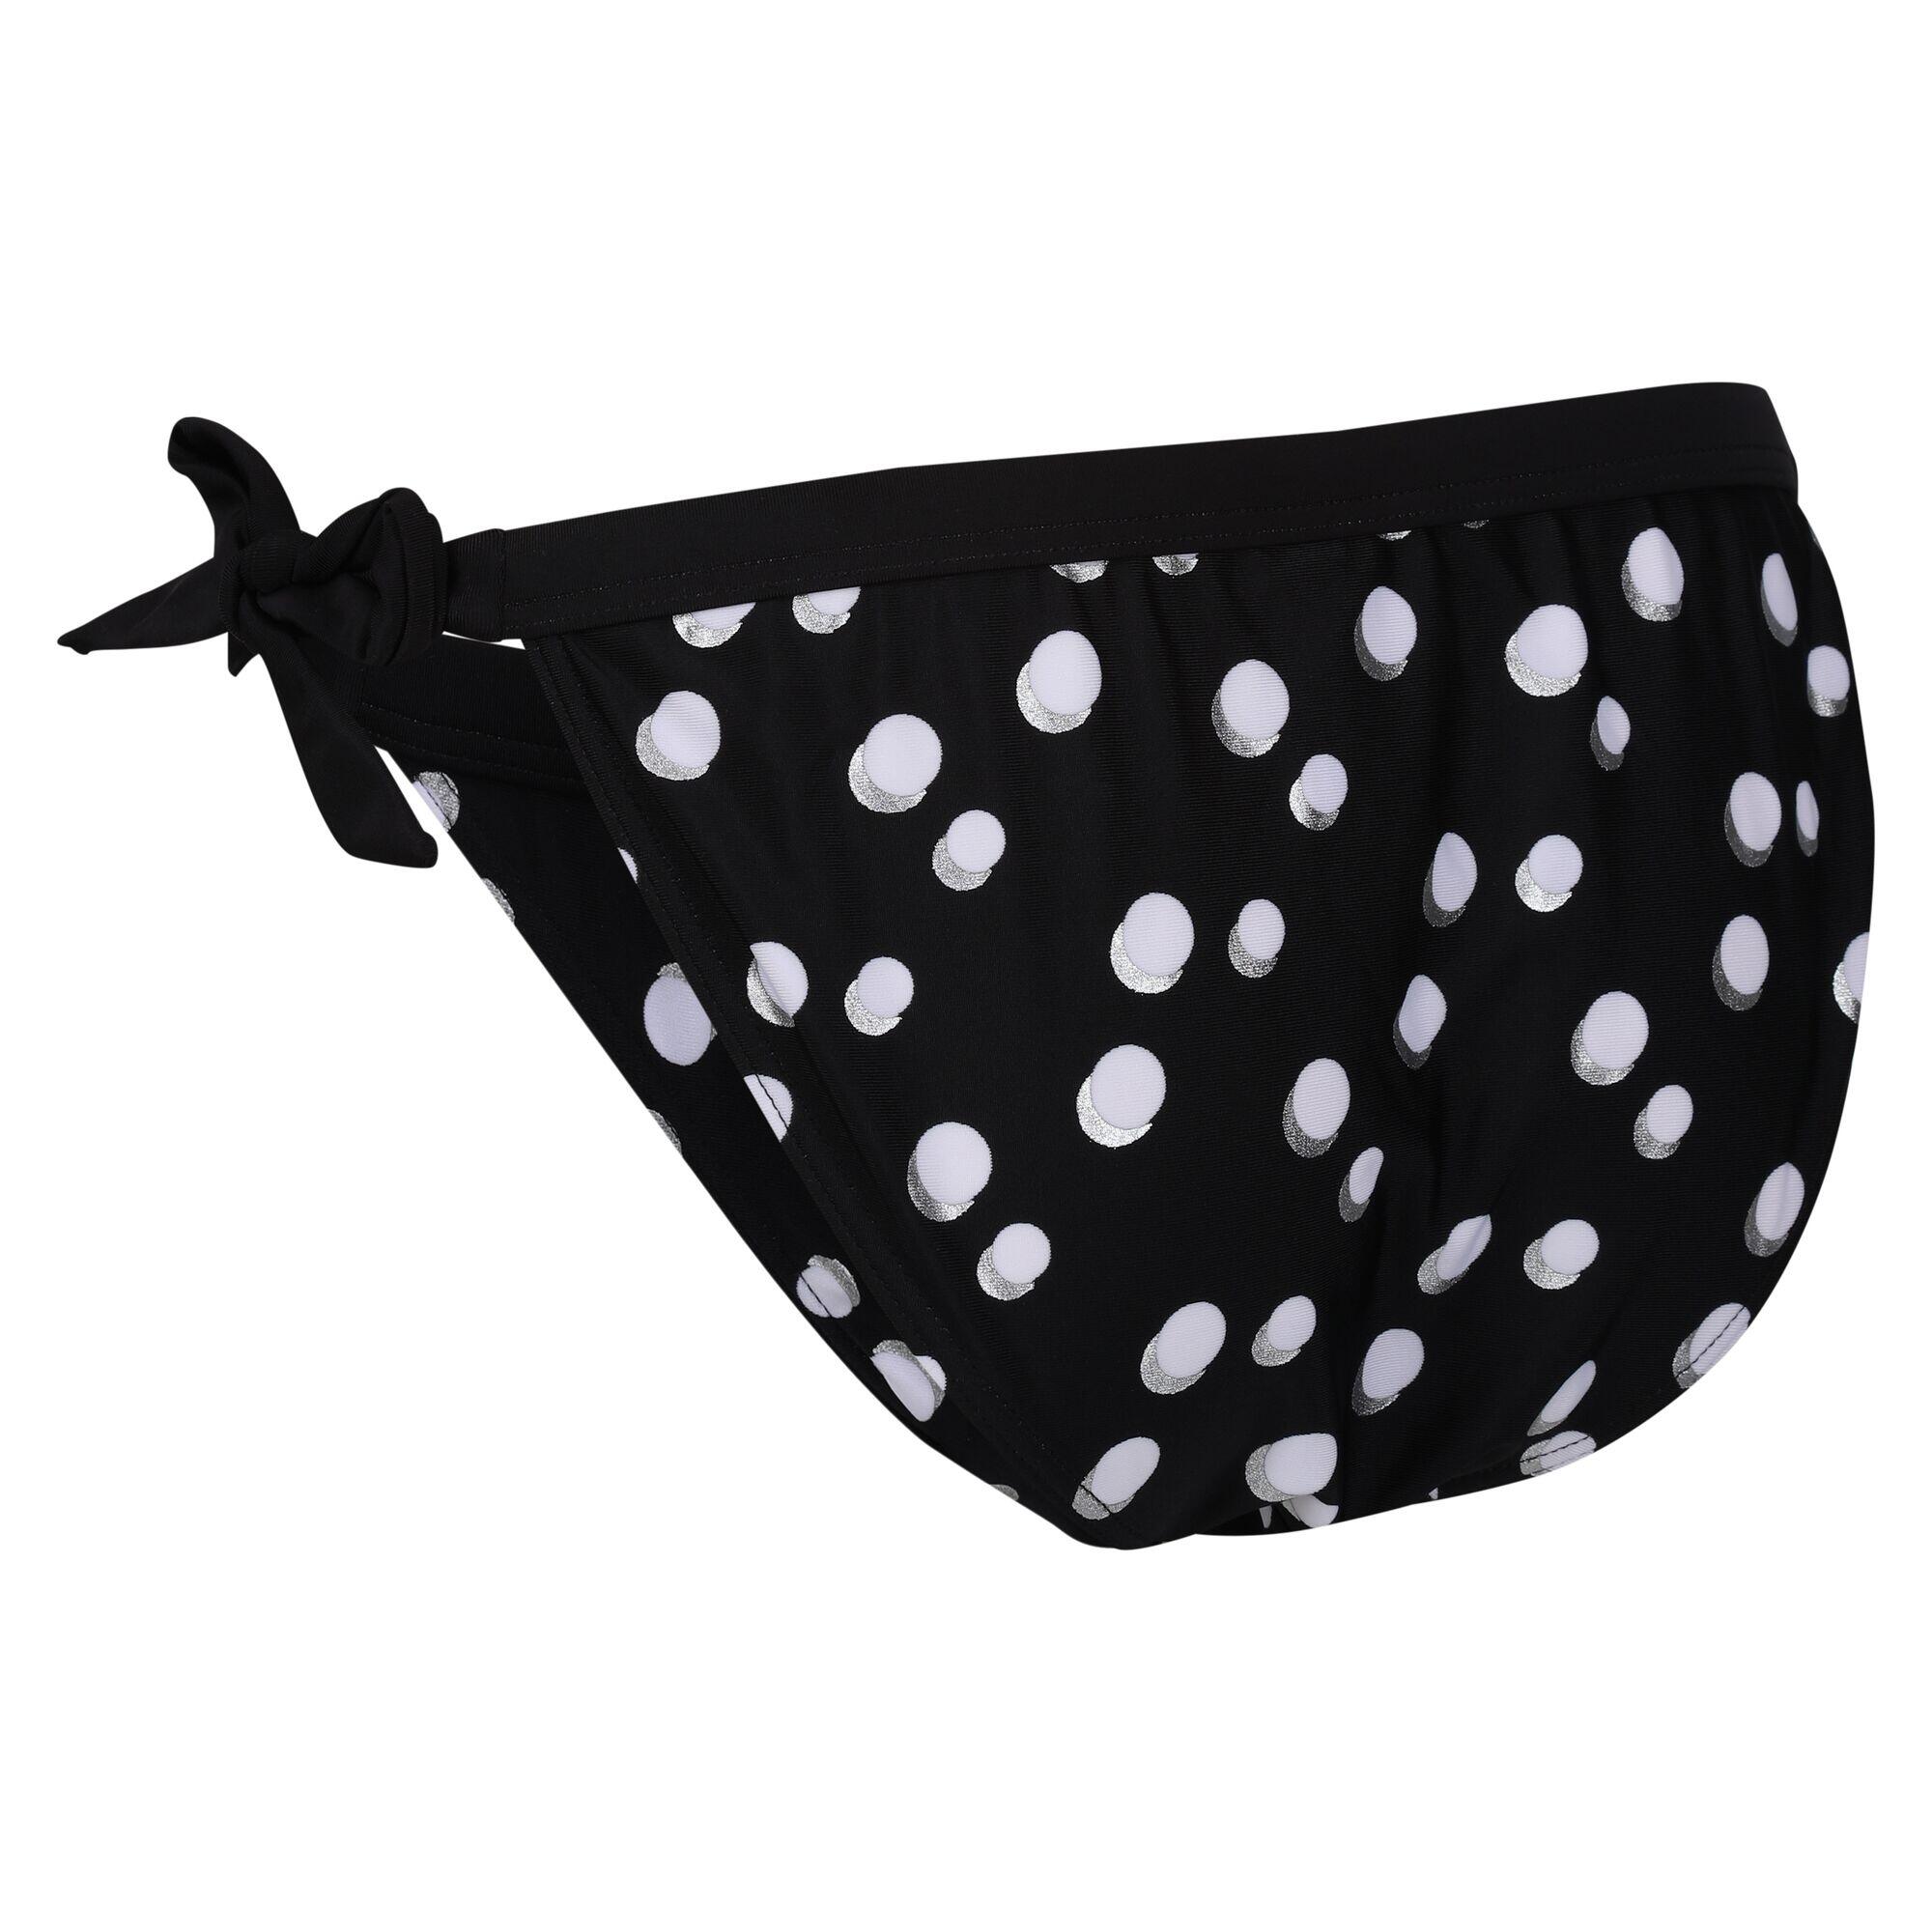 Womens/Ladies Flavia Polka Dot Bikini Bottoms (Black/White) 4/5